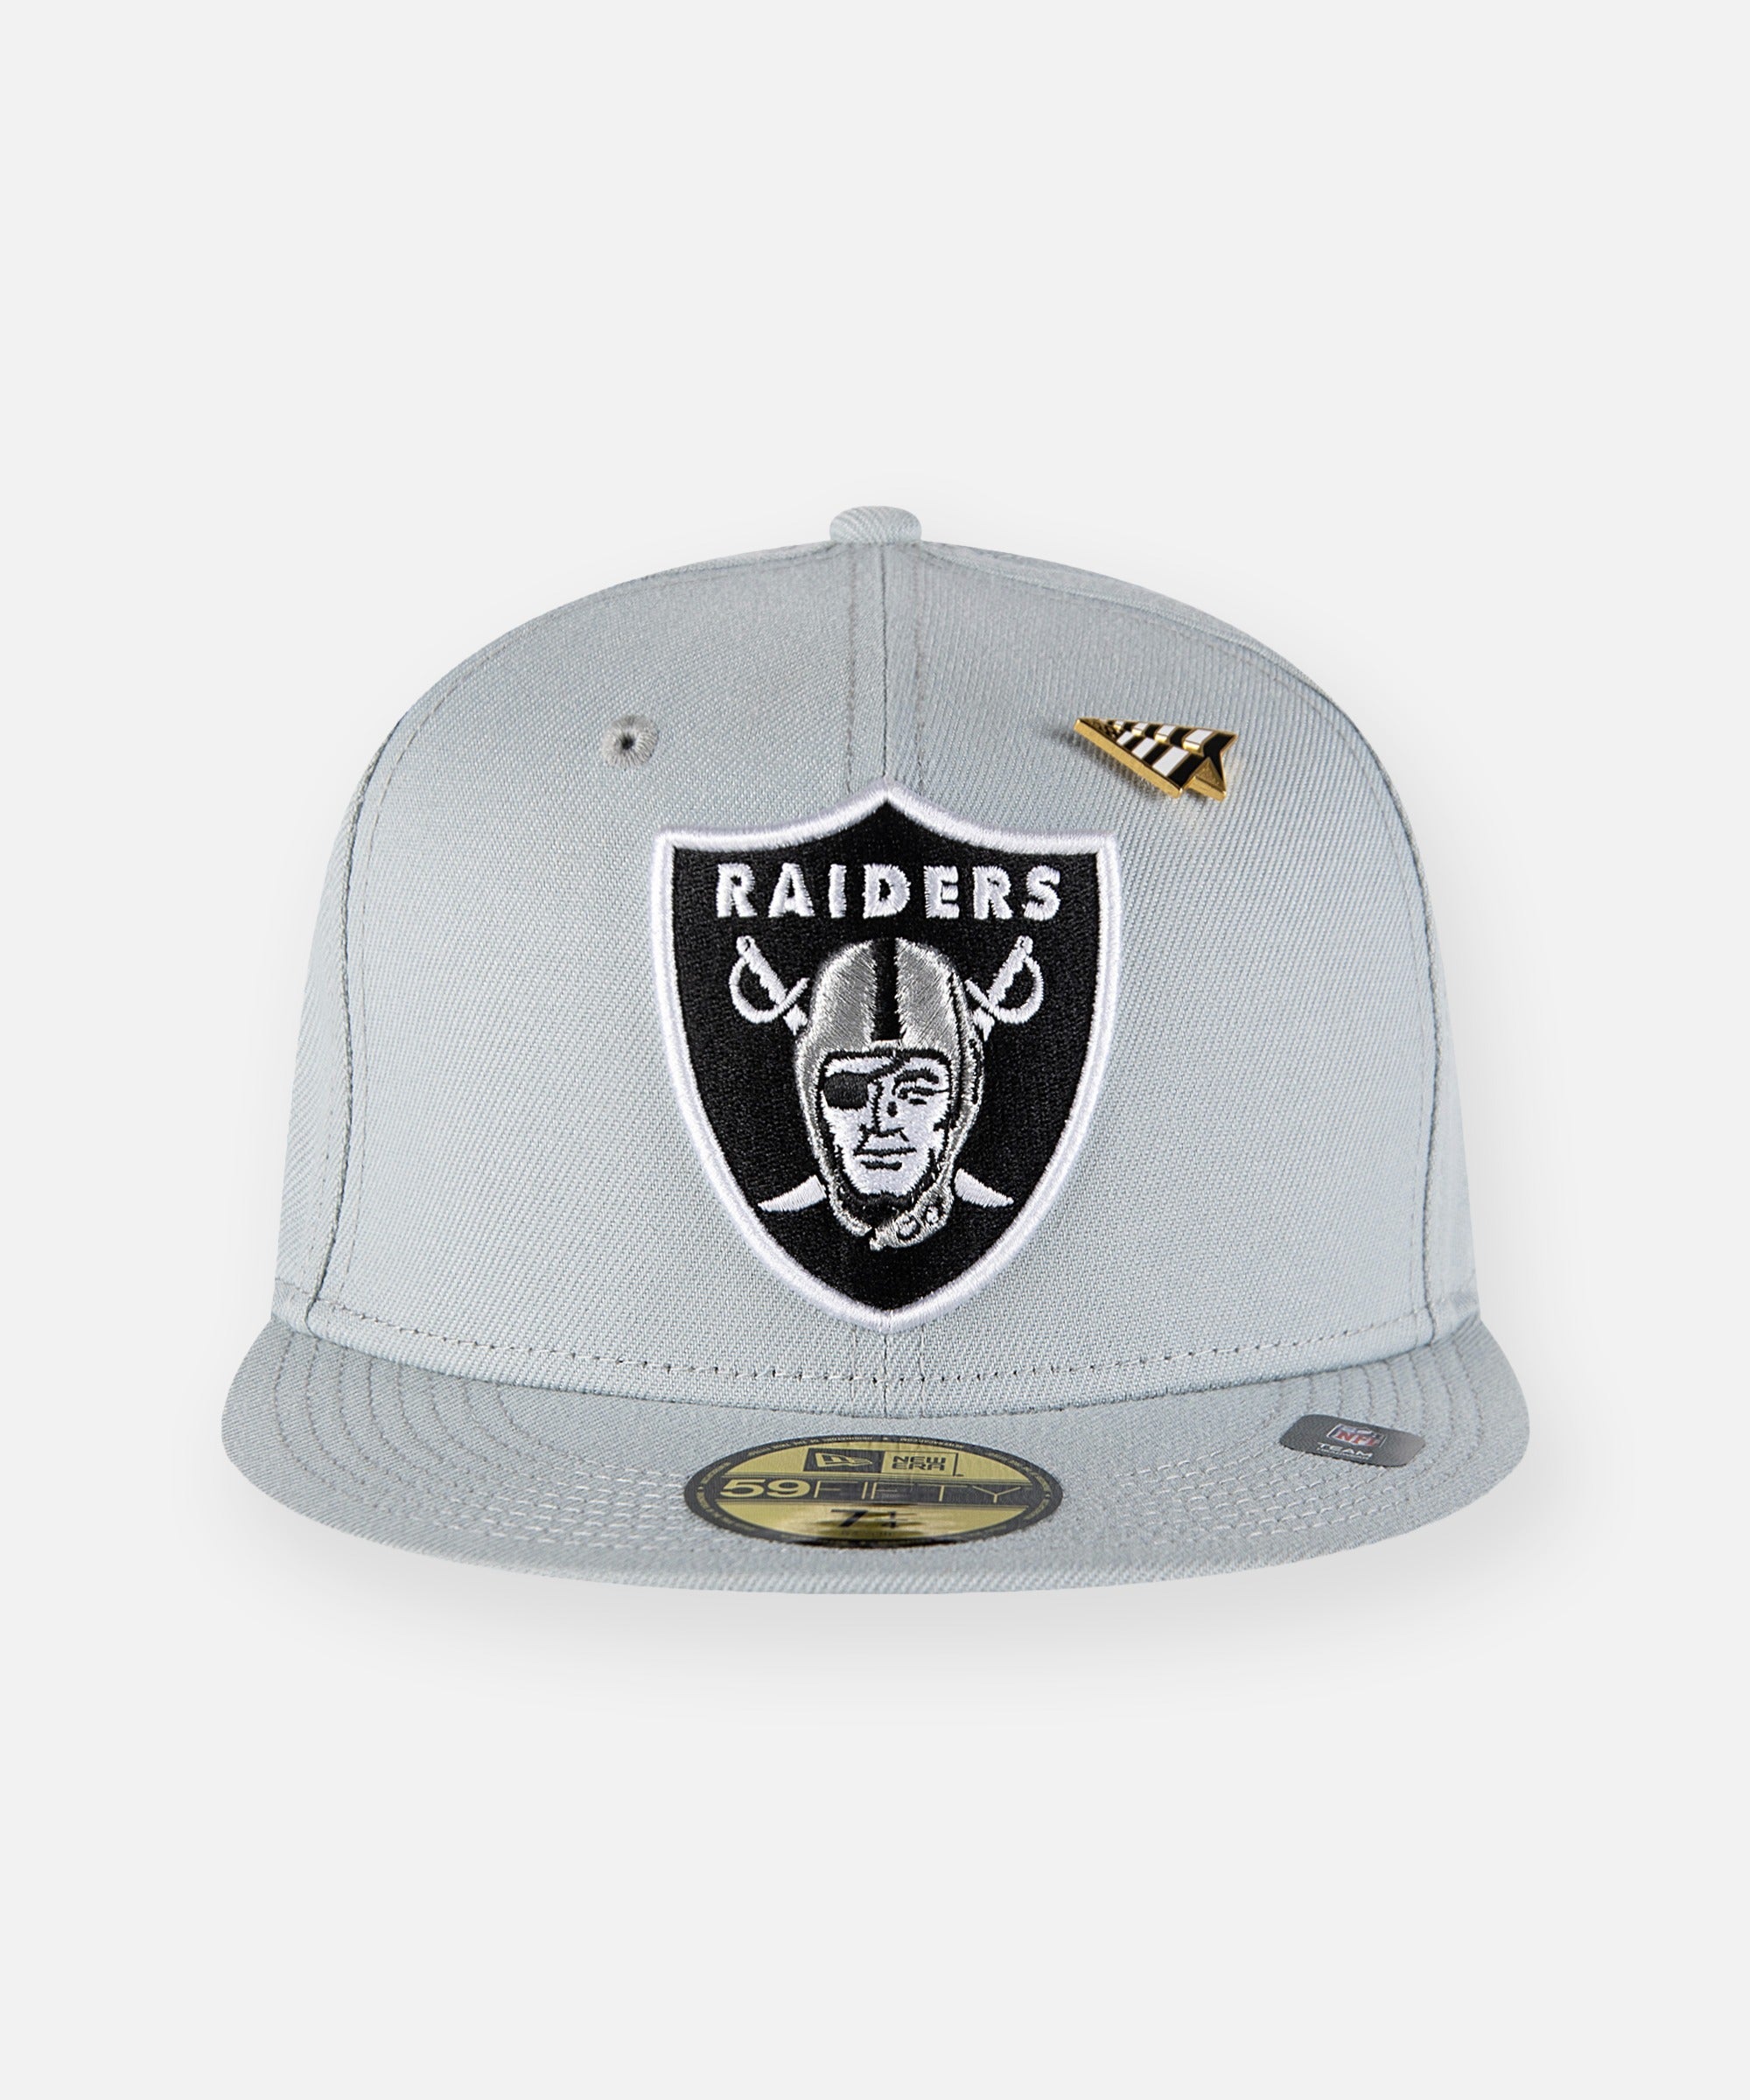 Las Vegas Raiders New Era Black & White 59FIFTY Fitted Hat - Black 7